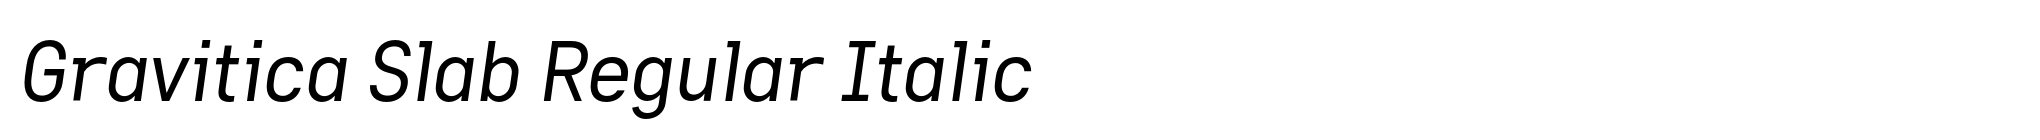 Gravitica Slab Regular Italic image